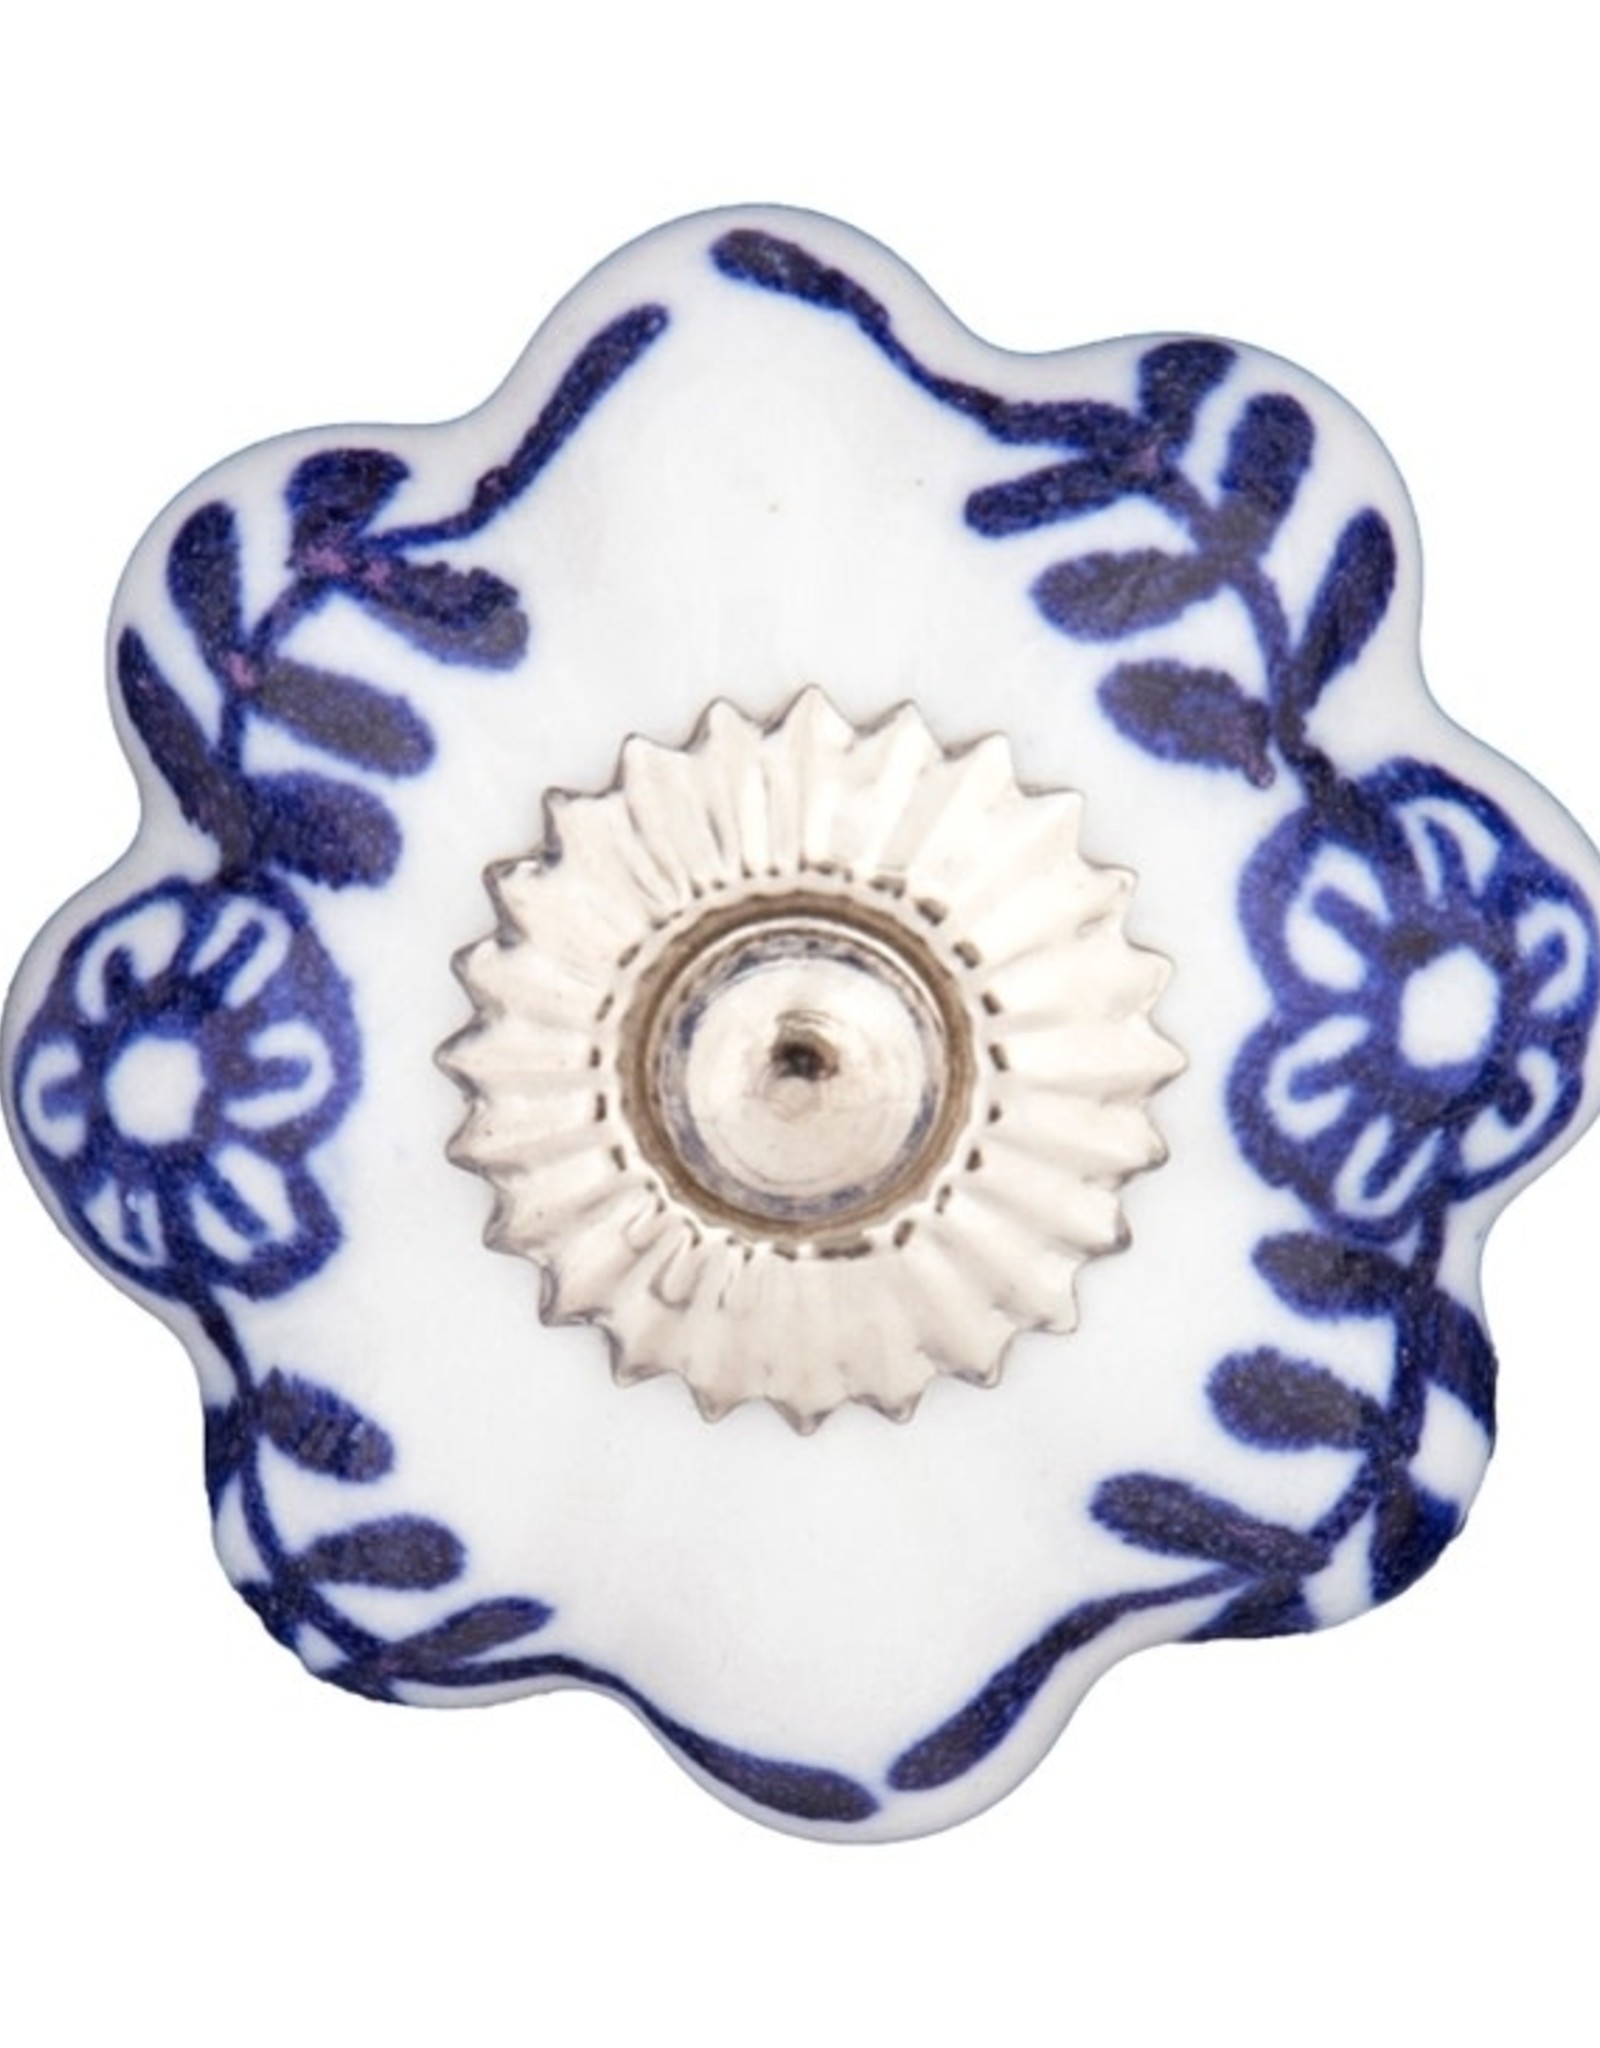 Mela Artisans Painted Ceramic Knob - Assorted